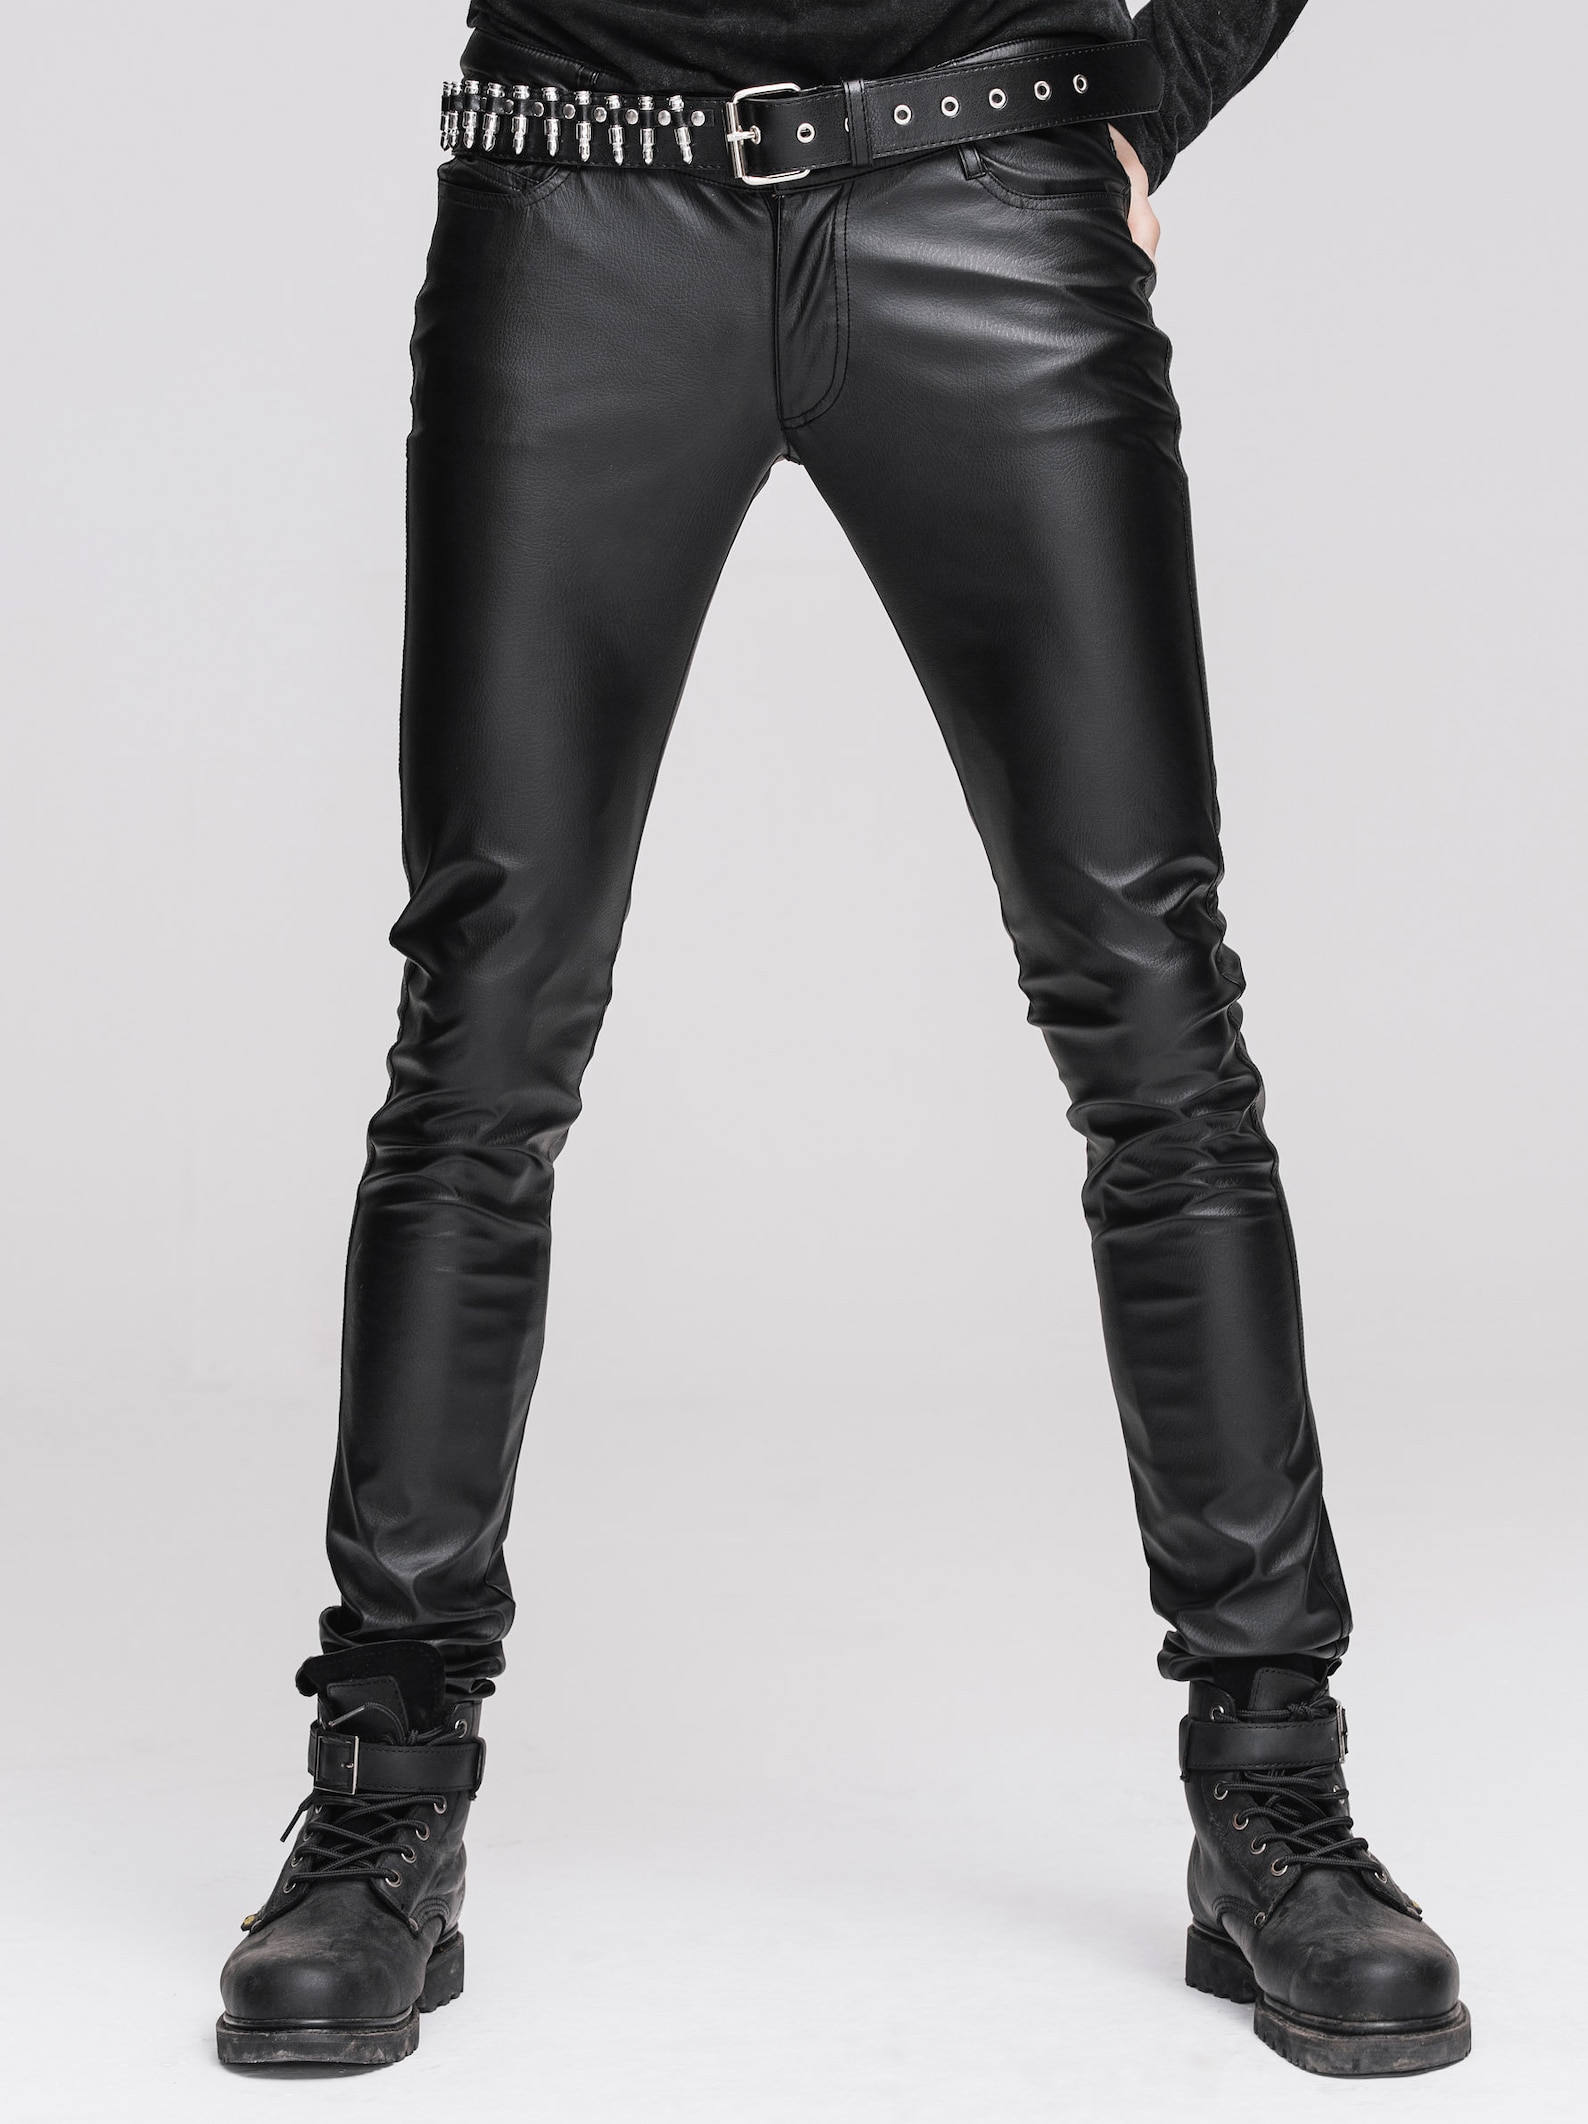 Men's Gothic Pants Goth Leather Pants Punk Leather | Etsy